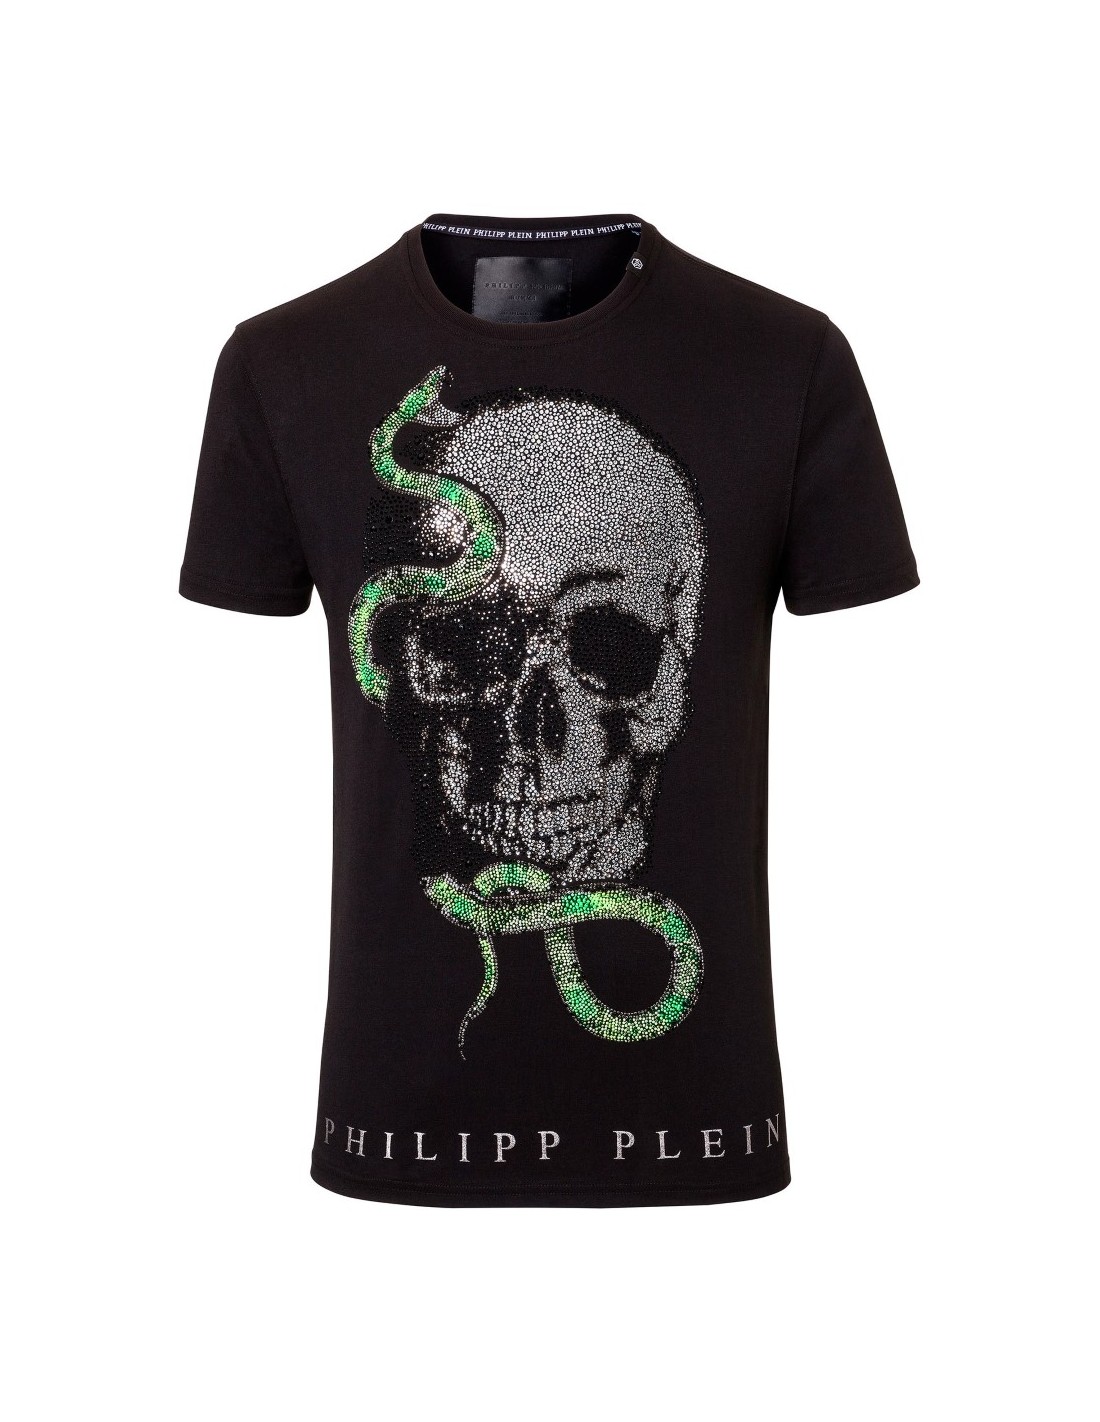 Camiseta de Philipp Plein con altamoda.shop